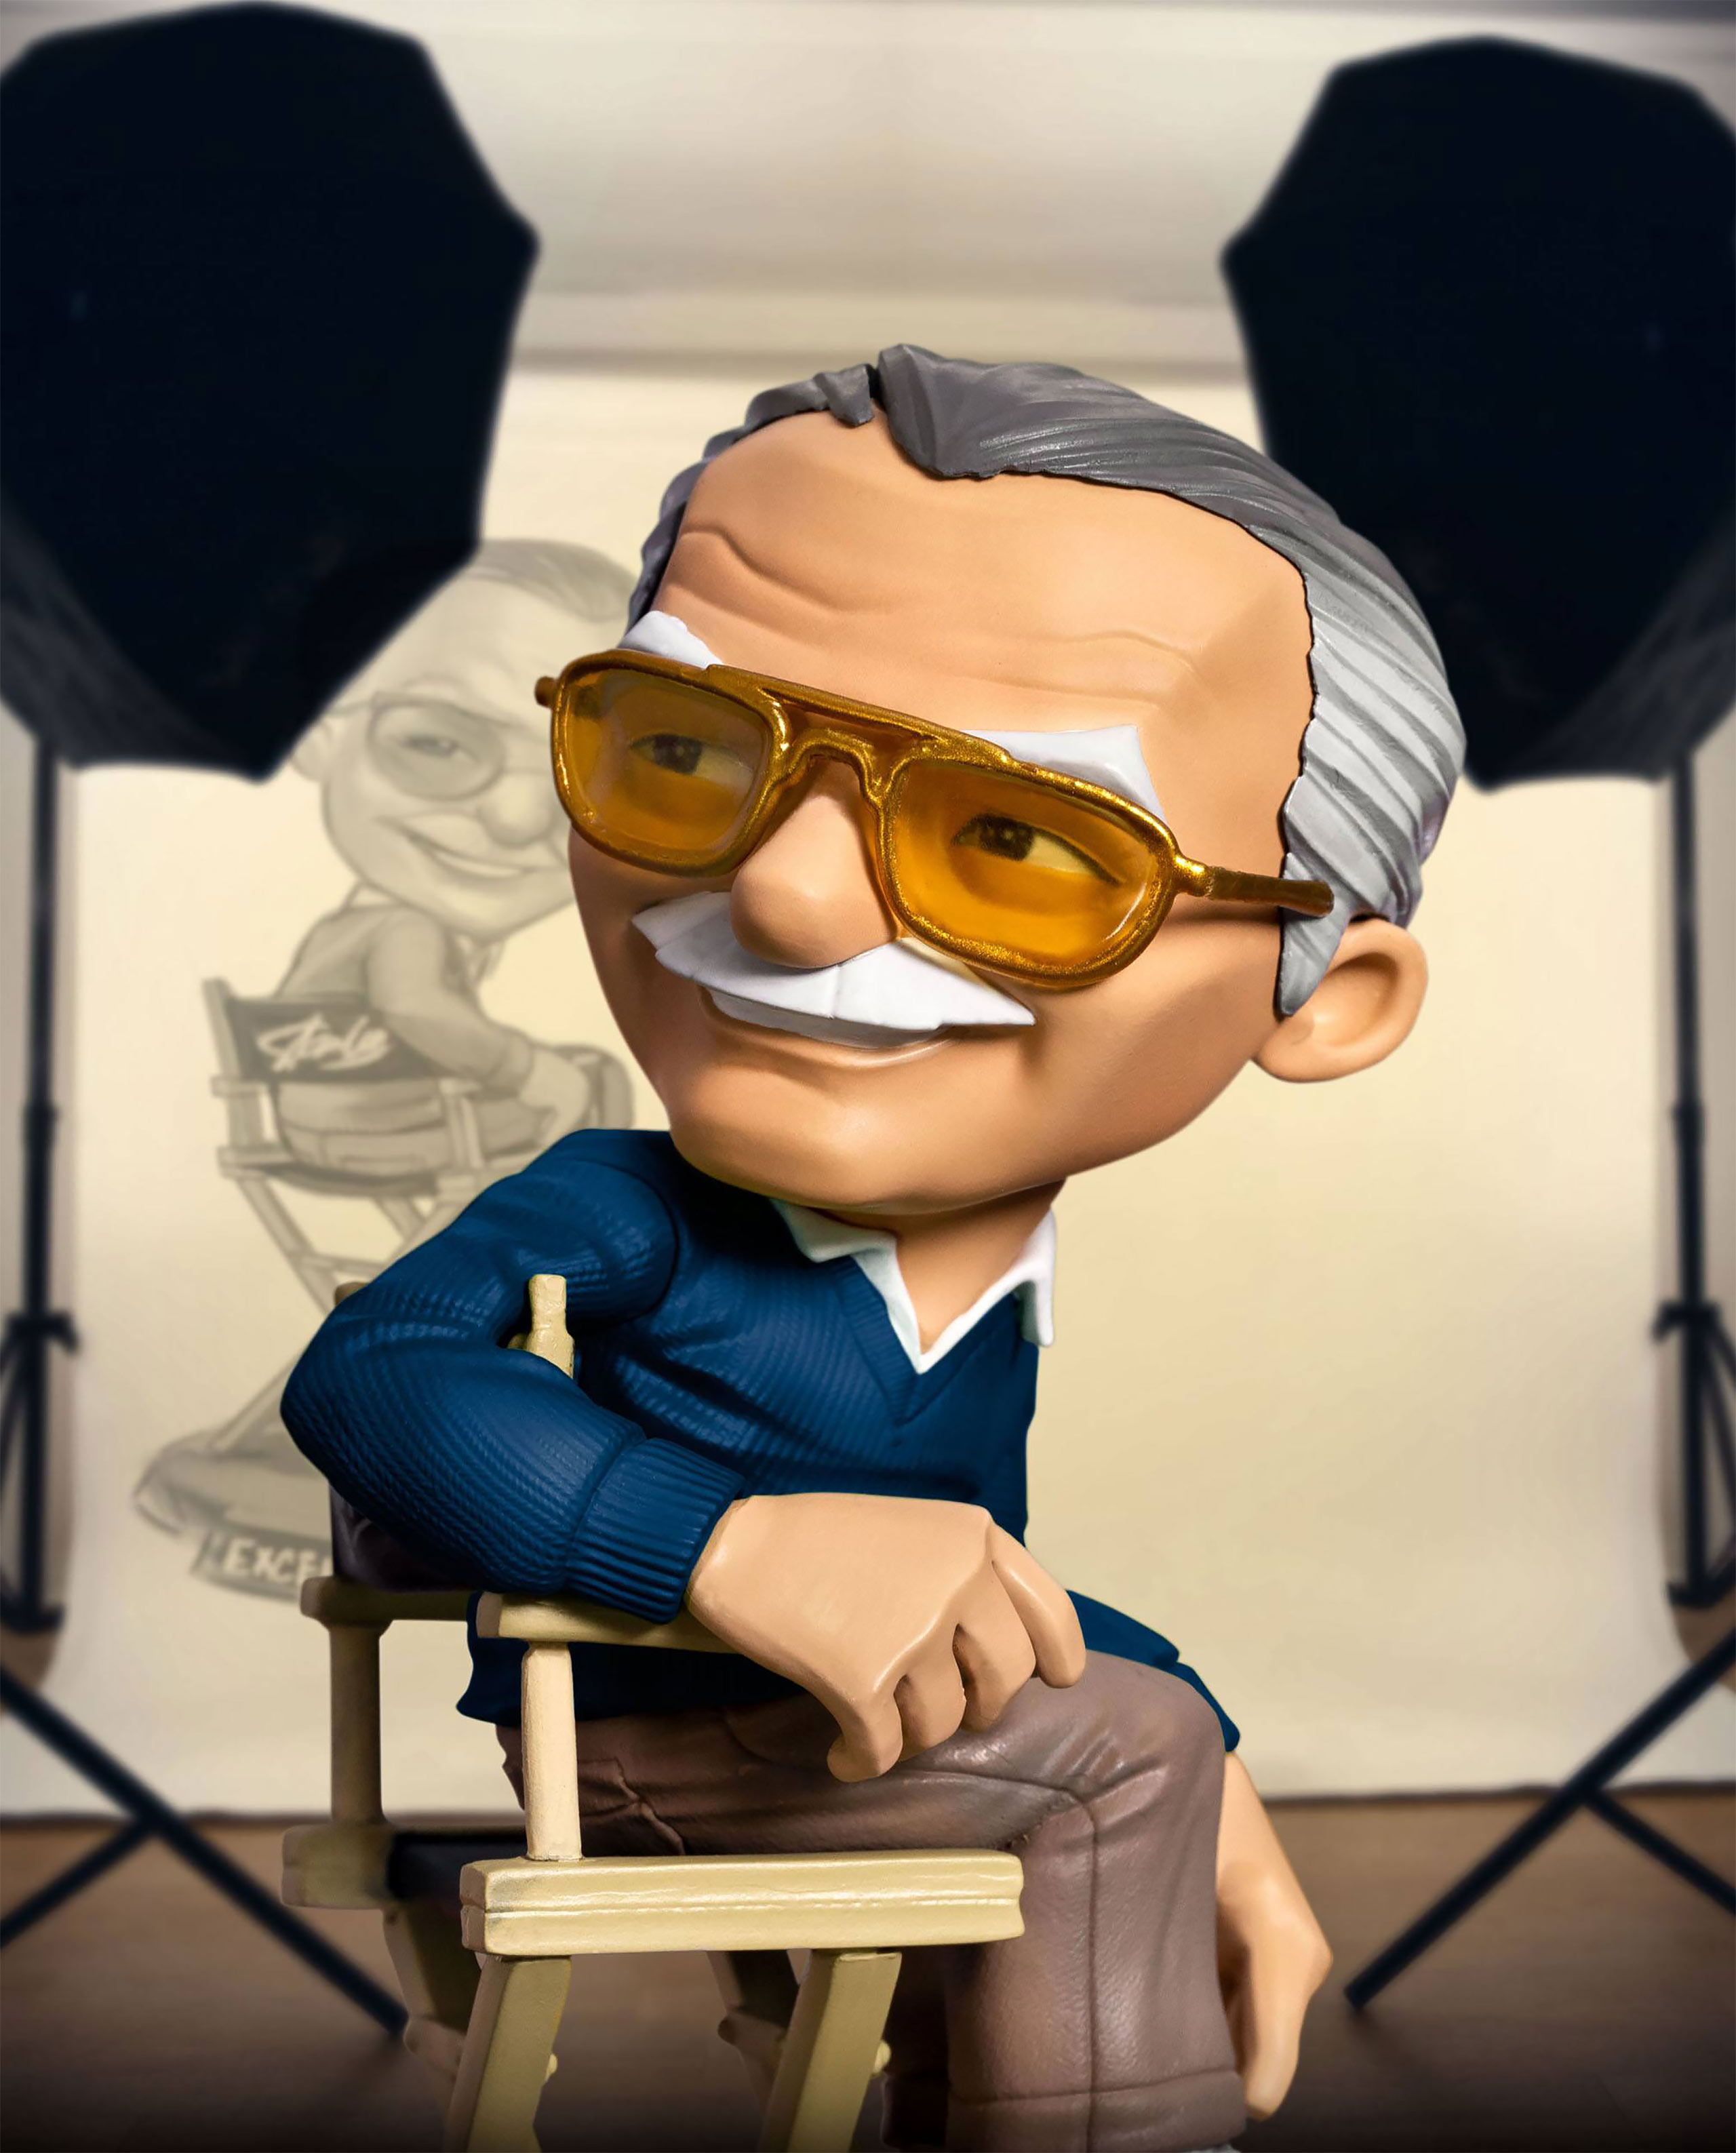 Stan Lee - Figurine Minico